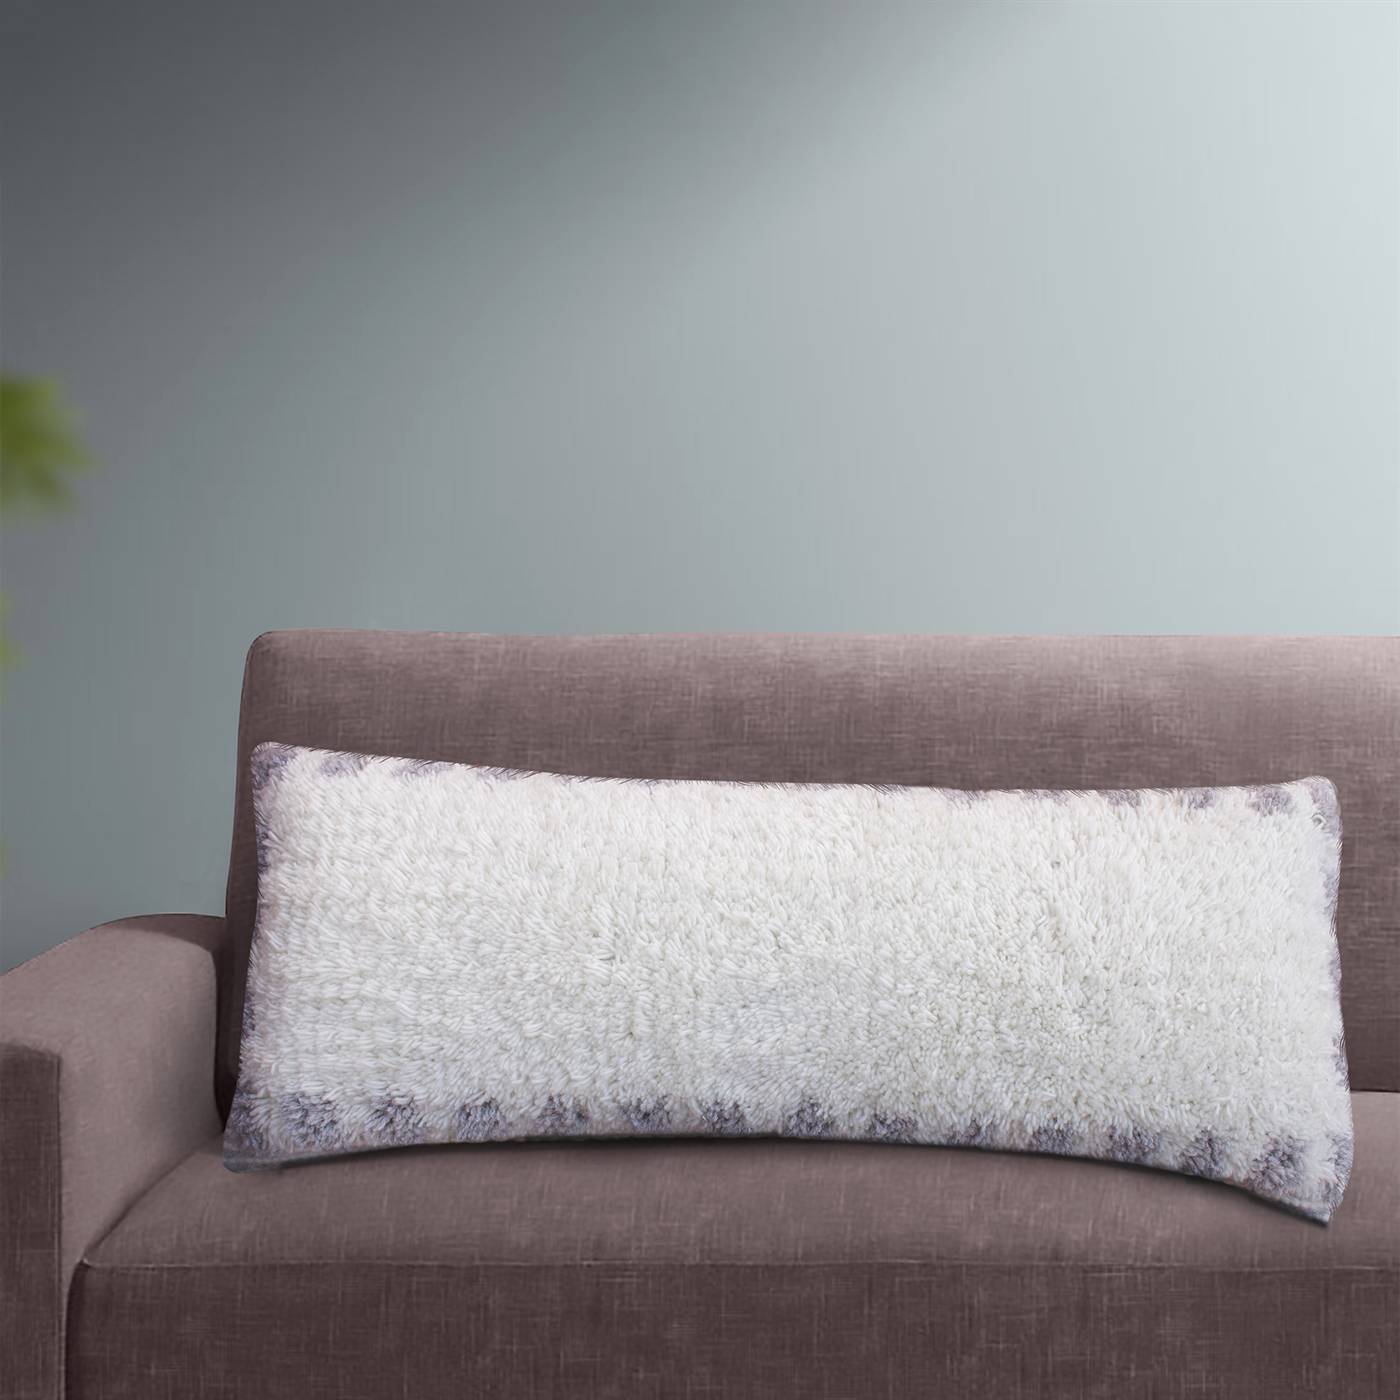 Brayden Lumber Cushion, 36x91 cm, Natural White, Grey, Wool, Hand Woven, Pitloom, All Cut